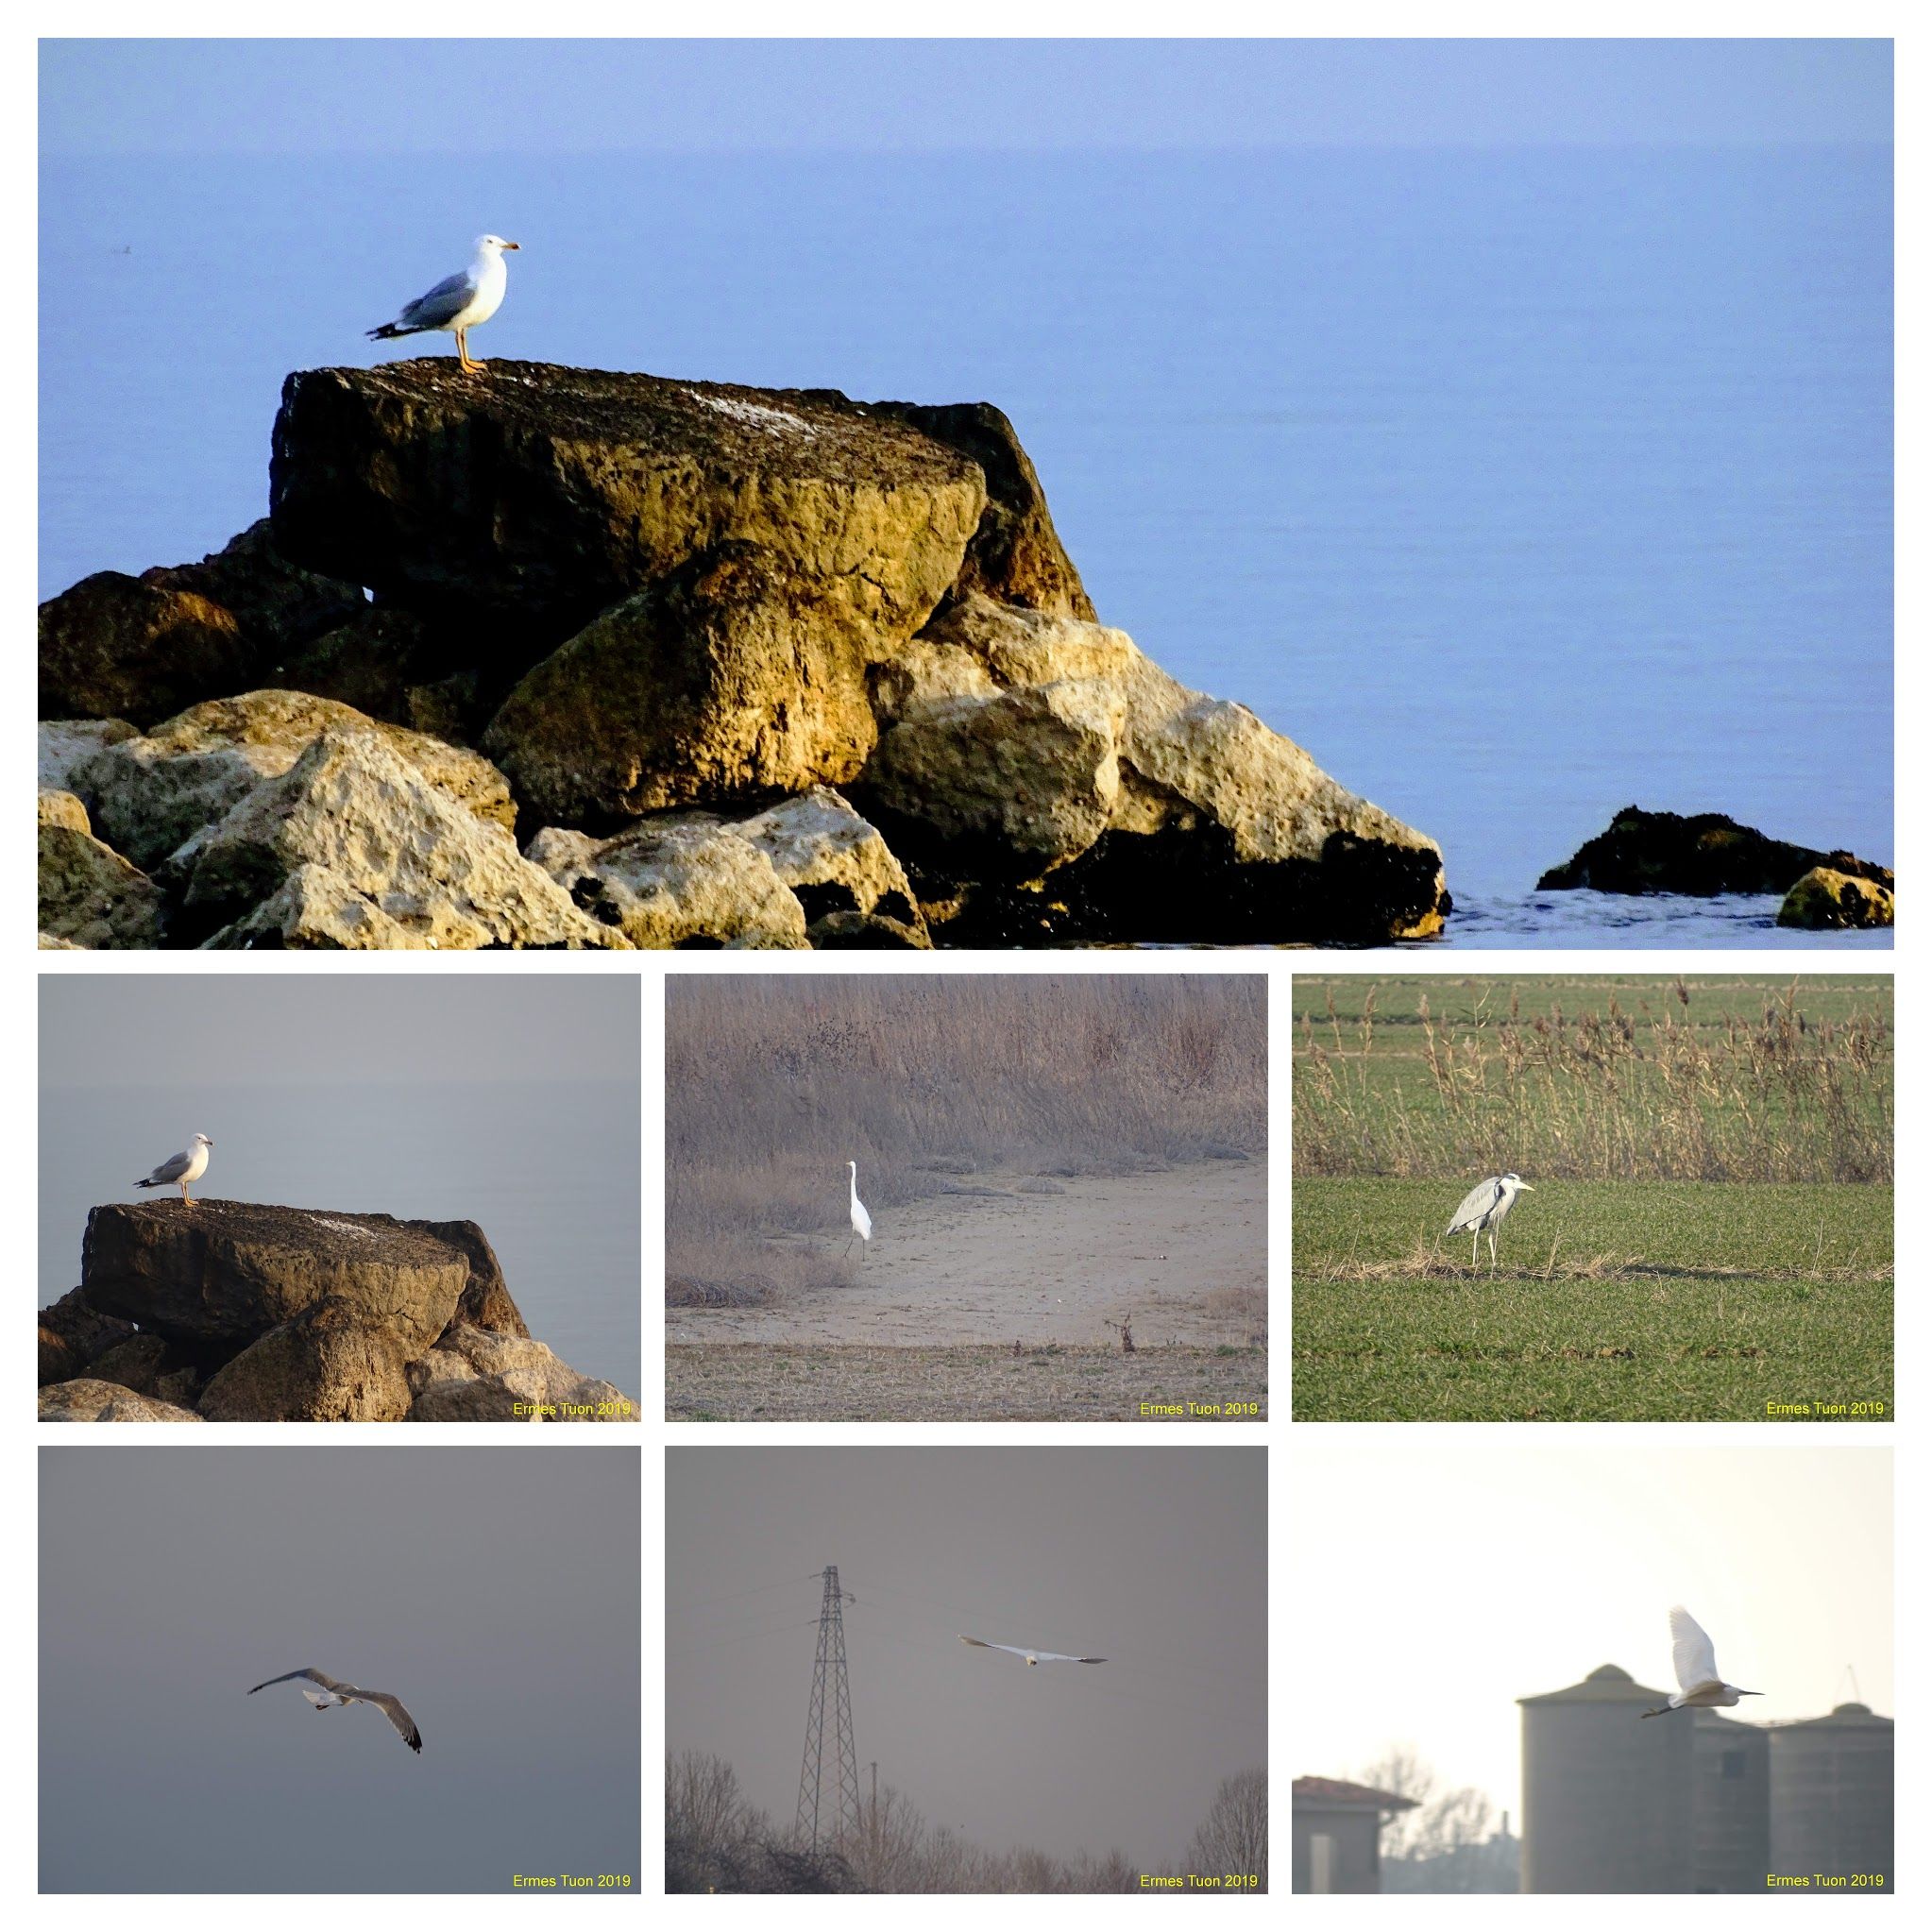 Caption: Birds on Laguna del Mort - Local Guide @ermest